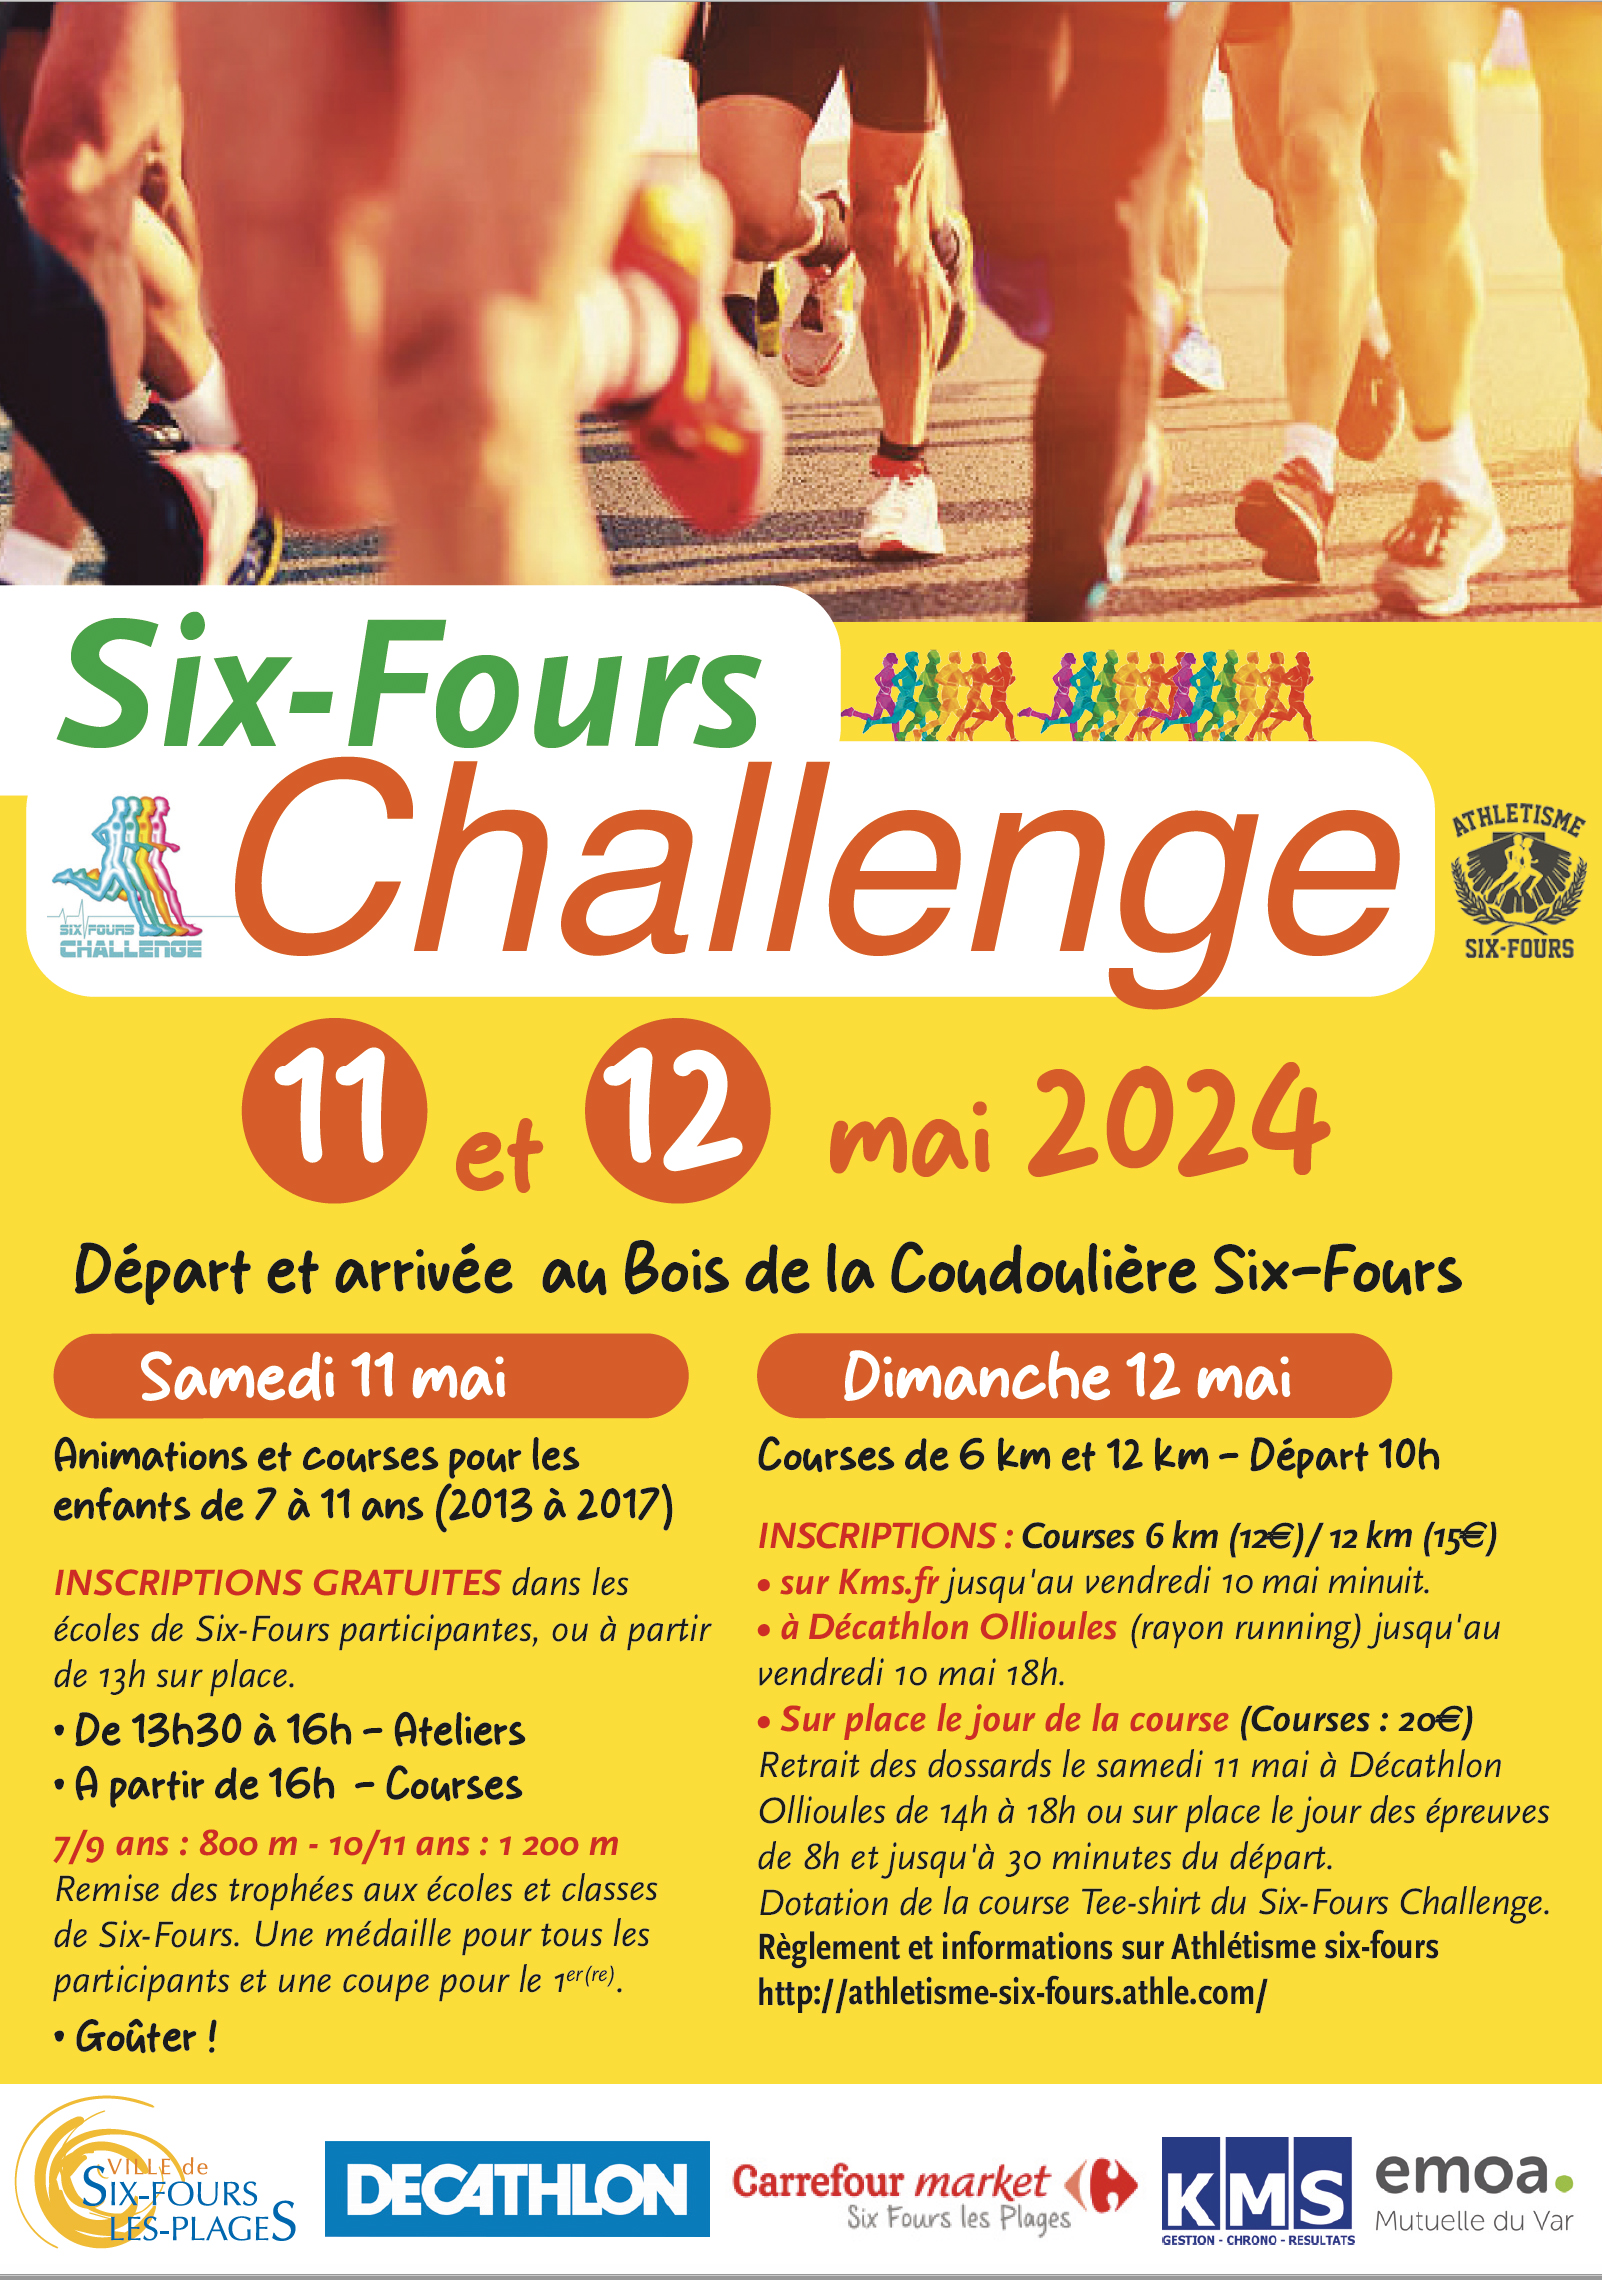 Six-Fours Challenge